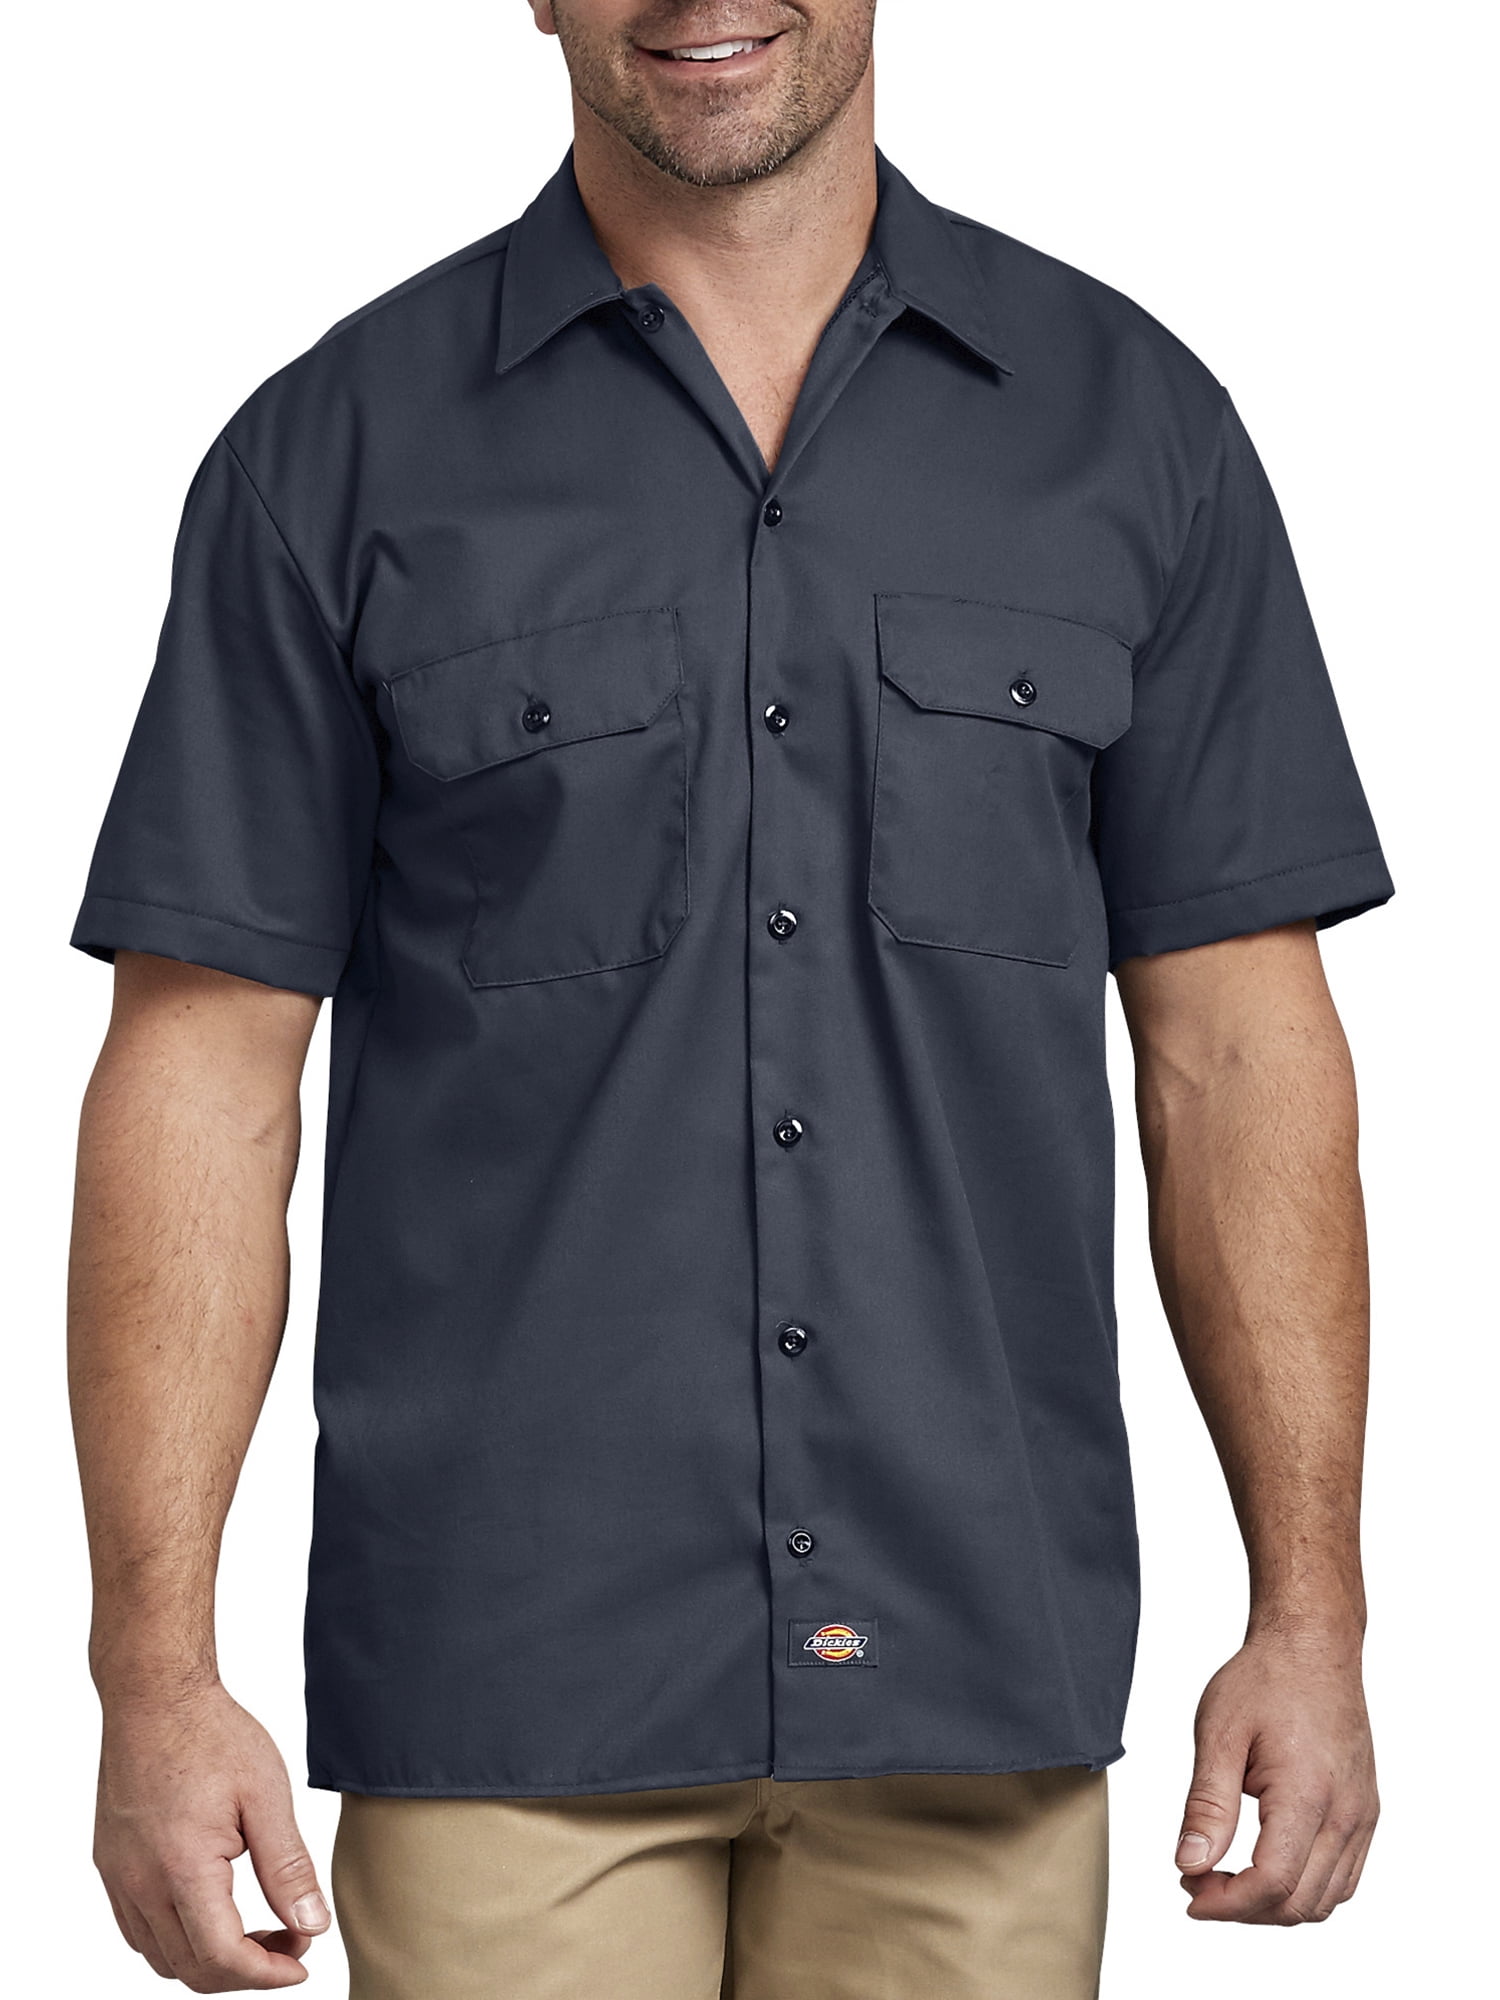 Dickies Shirts Mens Short Sleeve Chef Cook Shirt Pocketless DC127 Black or White 